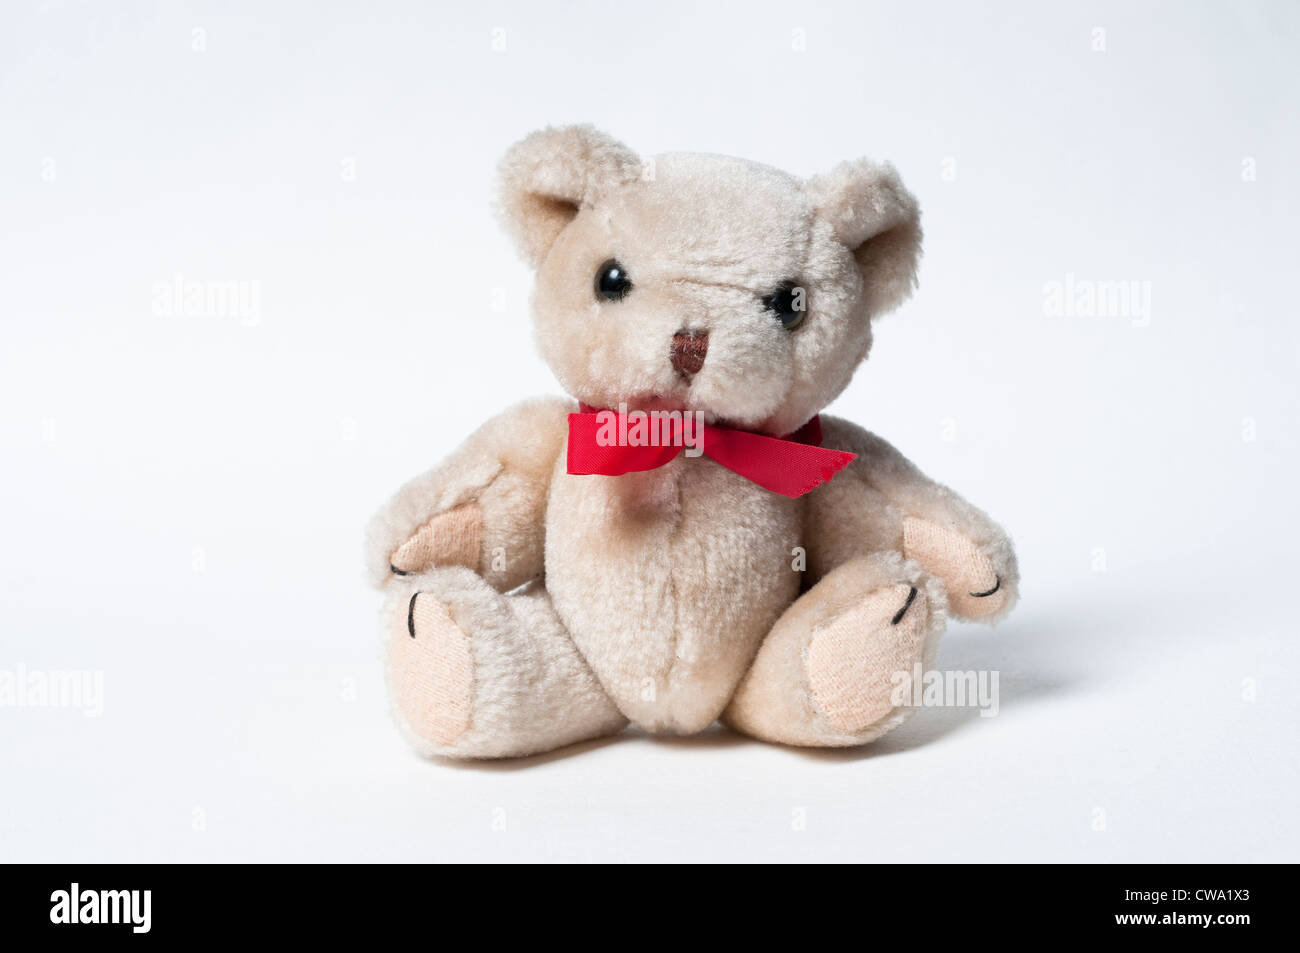 Little teddy bear Stock Photo